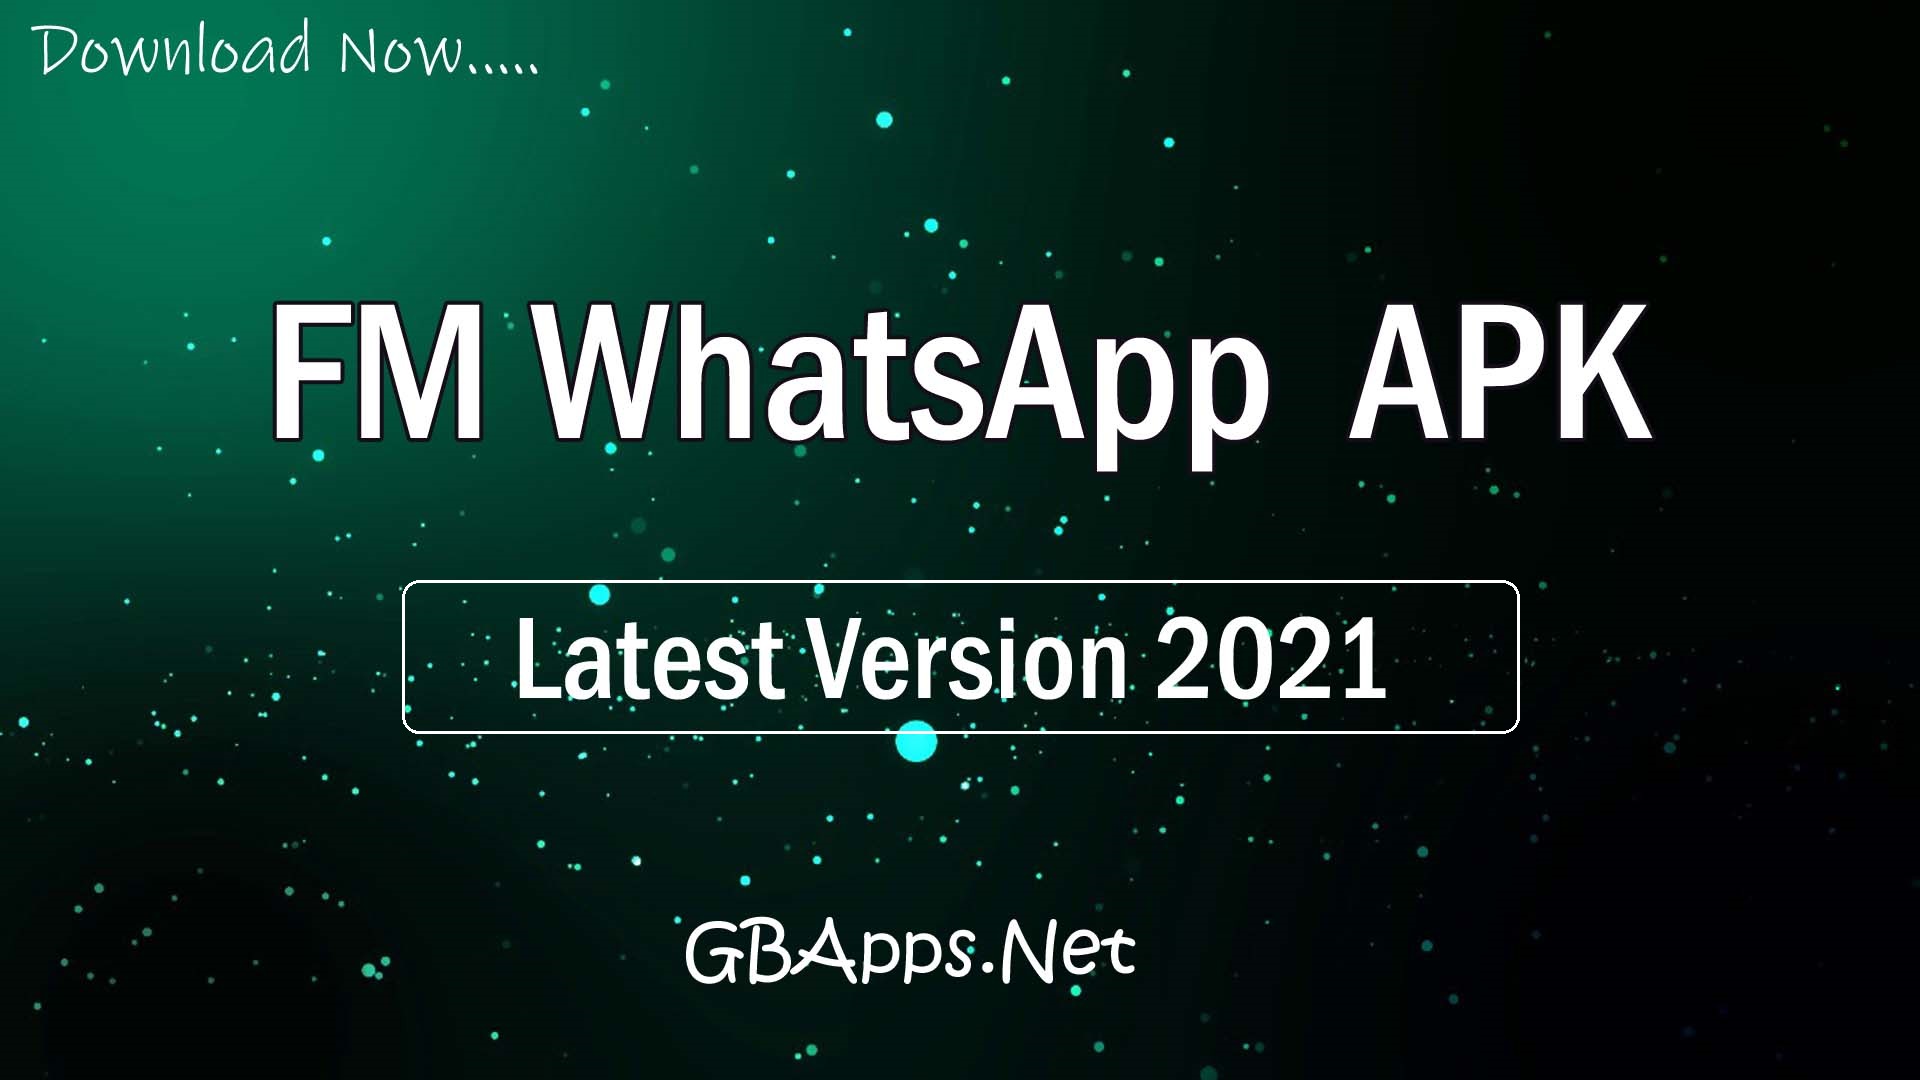 whatsapp gb new version 2021 download